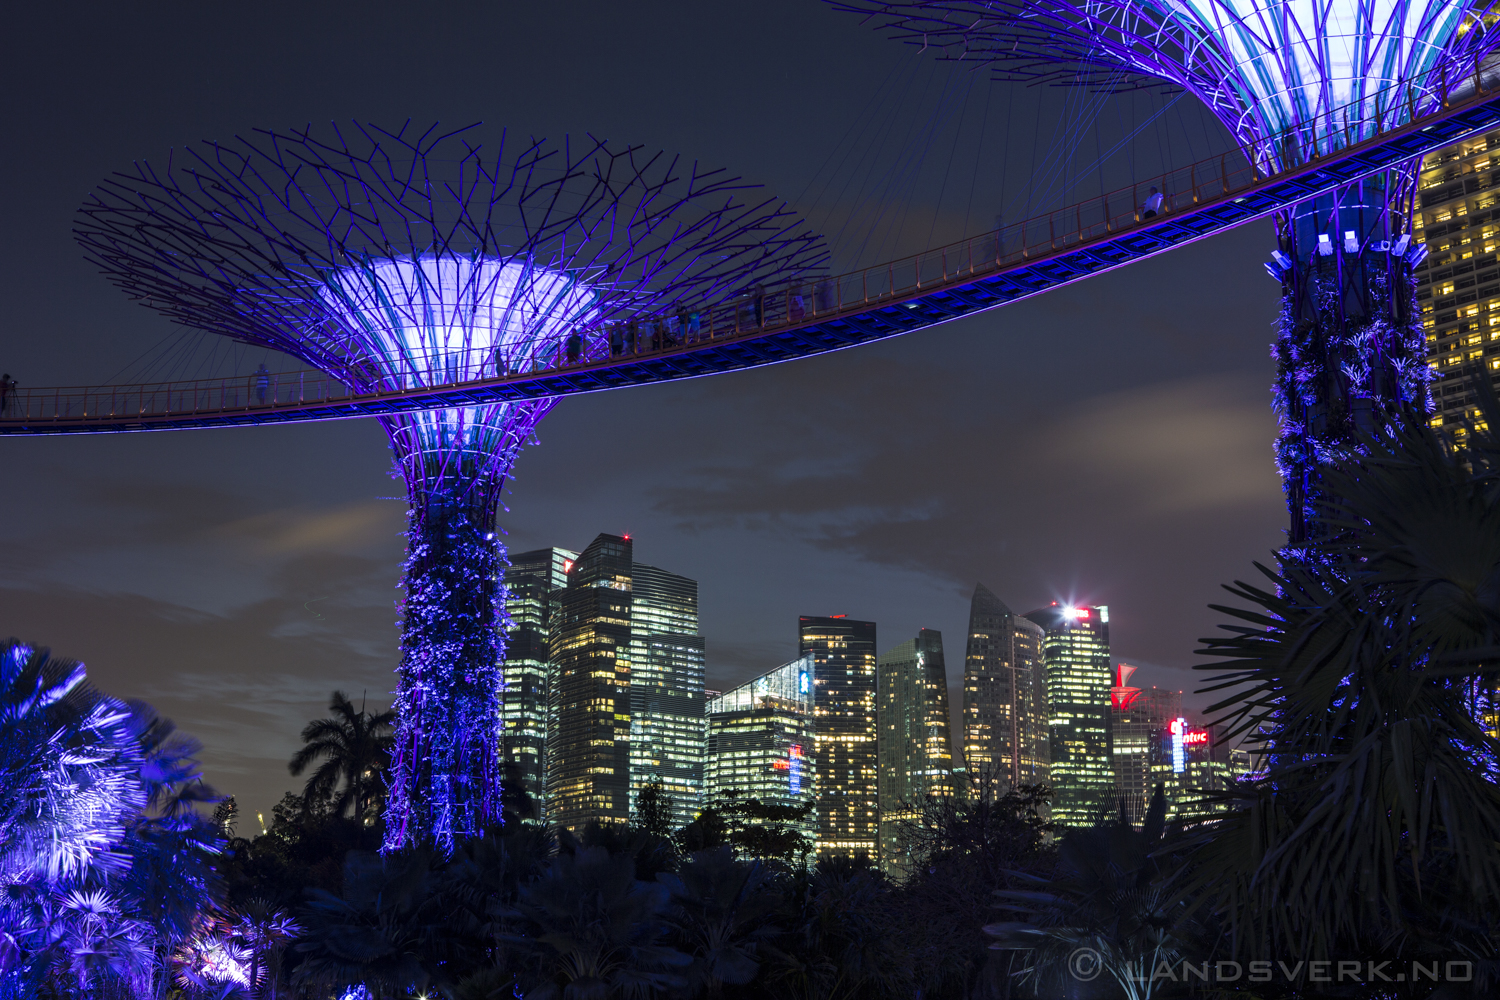 Super Tree Grove, Singapore. 

(Canon EOS 5D Mark III / Canon EF 24-70mm f/2.8 L USM)